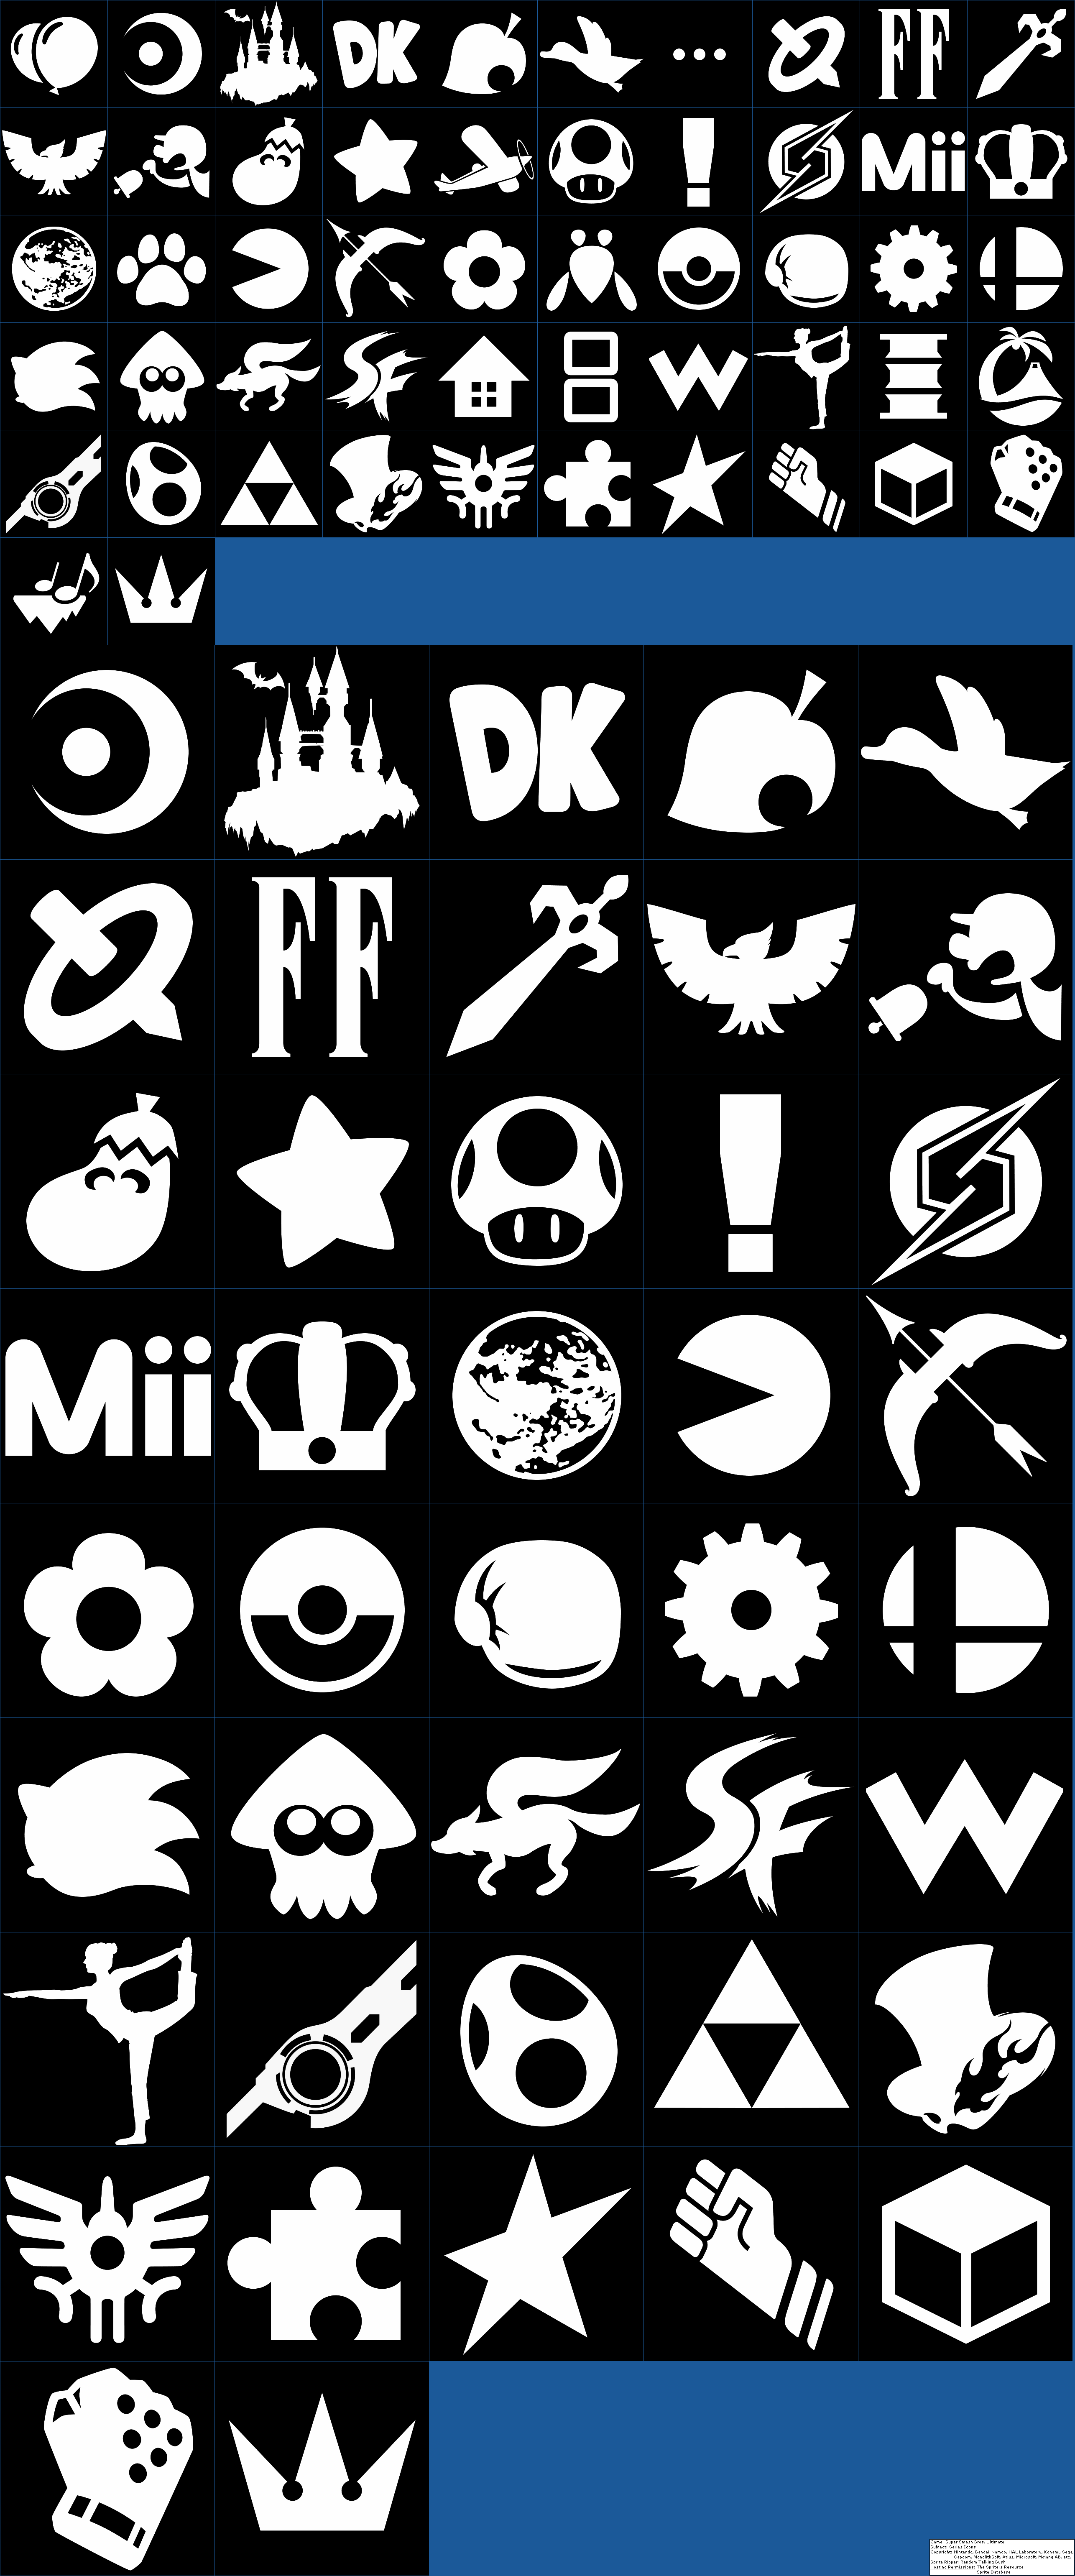 Super Smash Bros. Ultimate - Series Icons